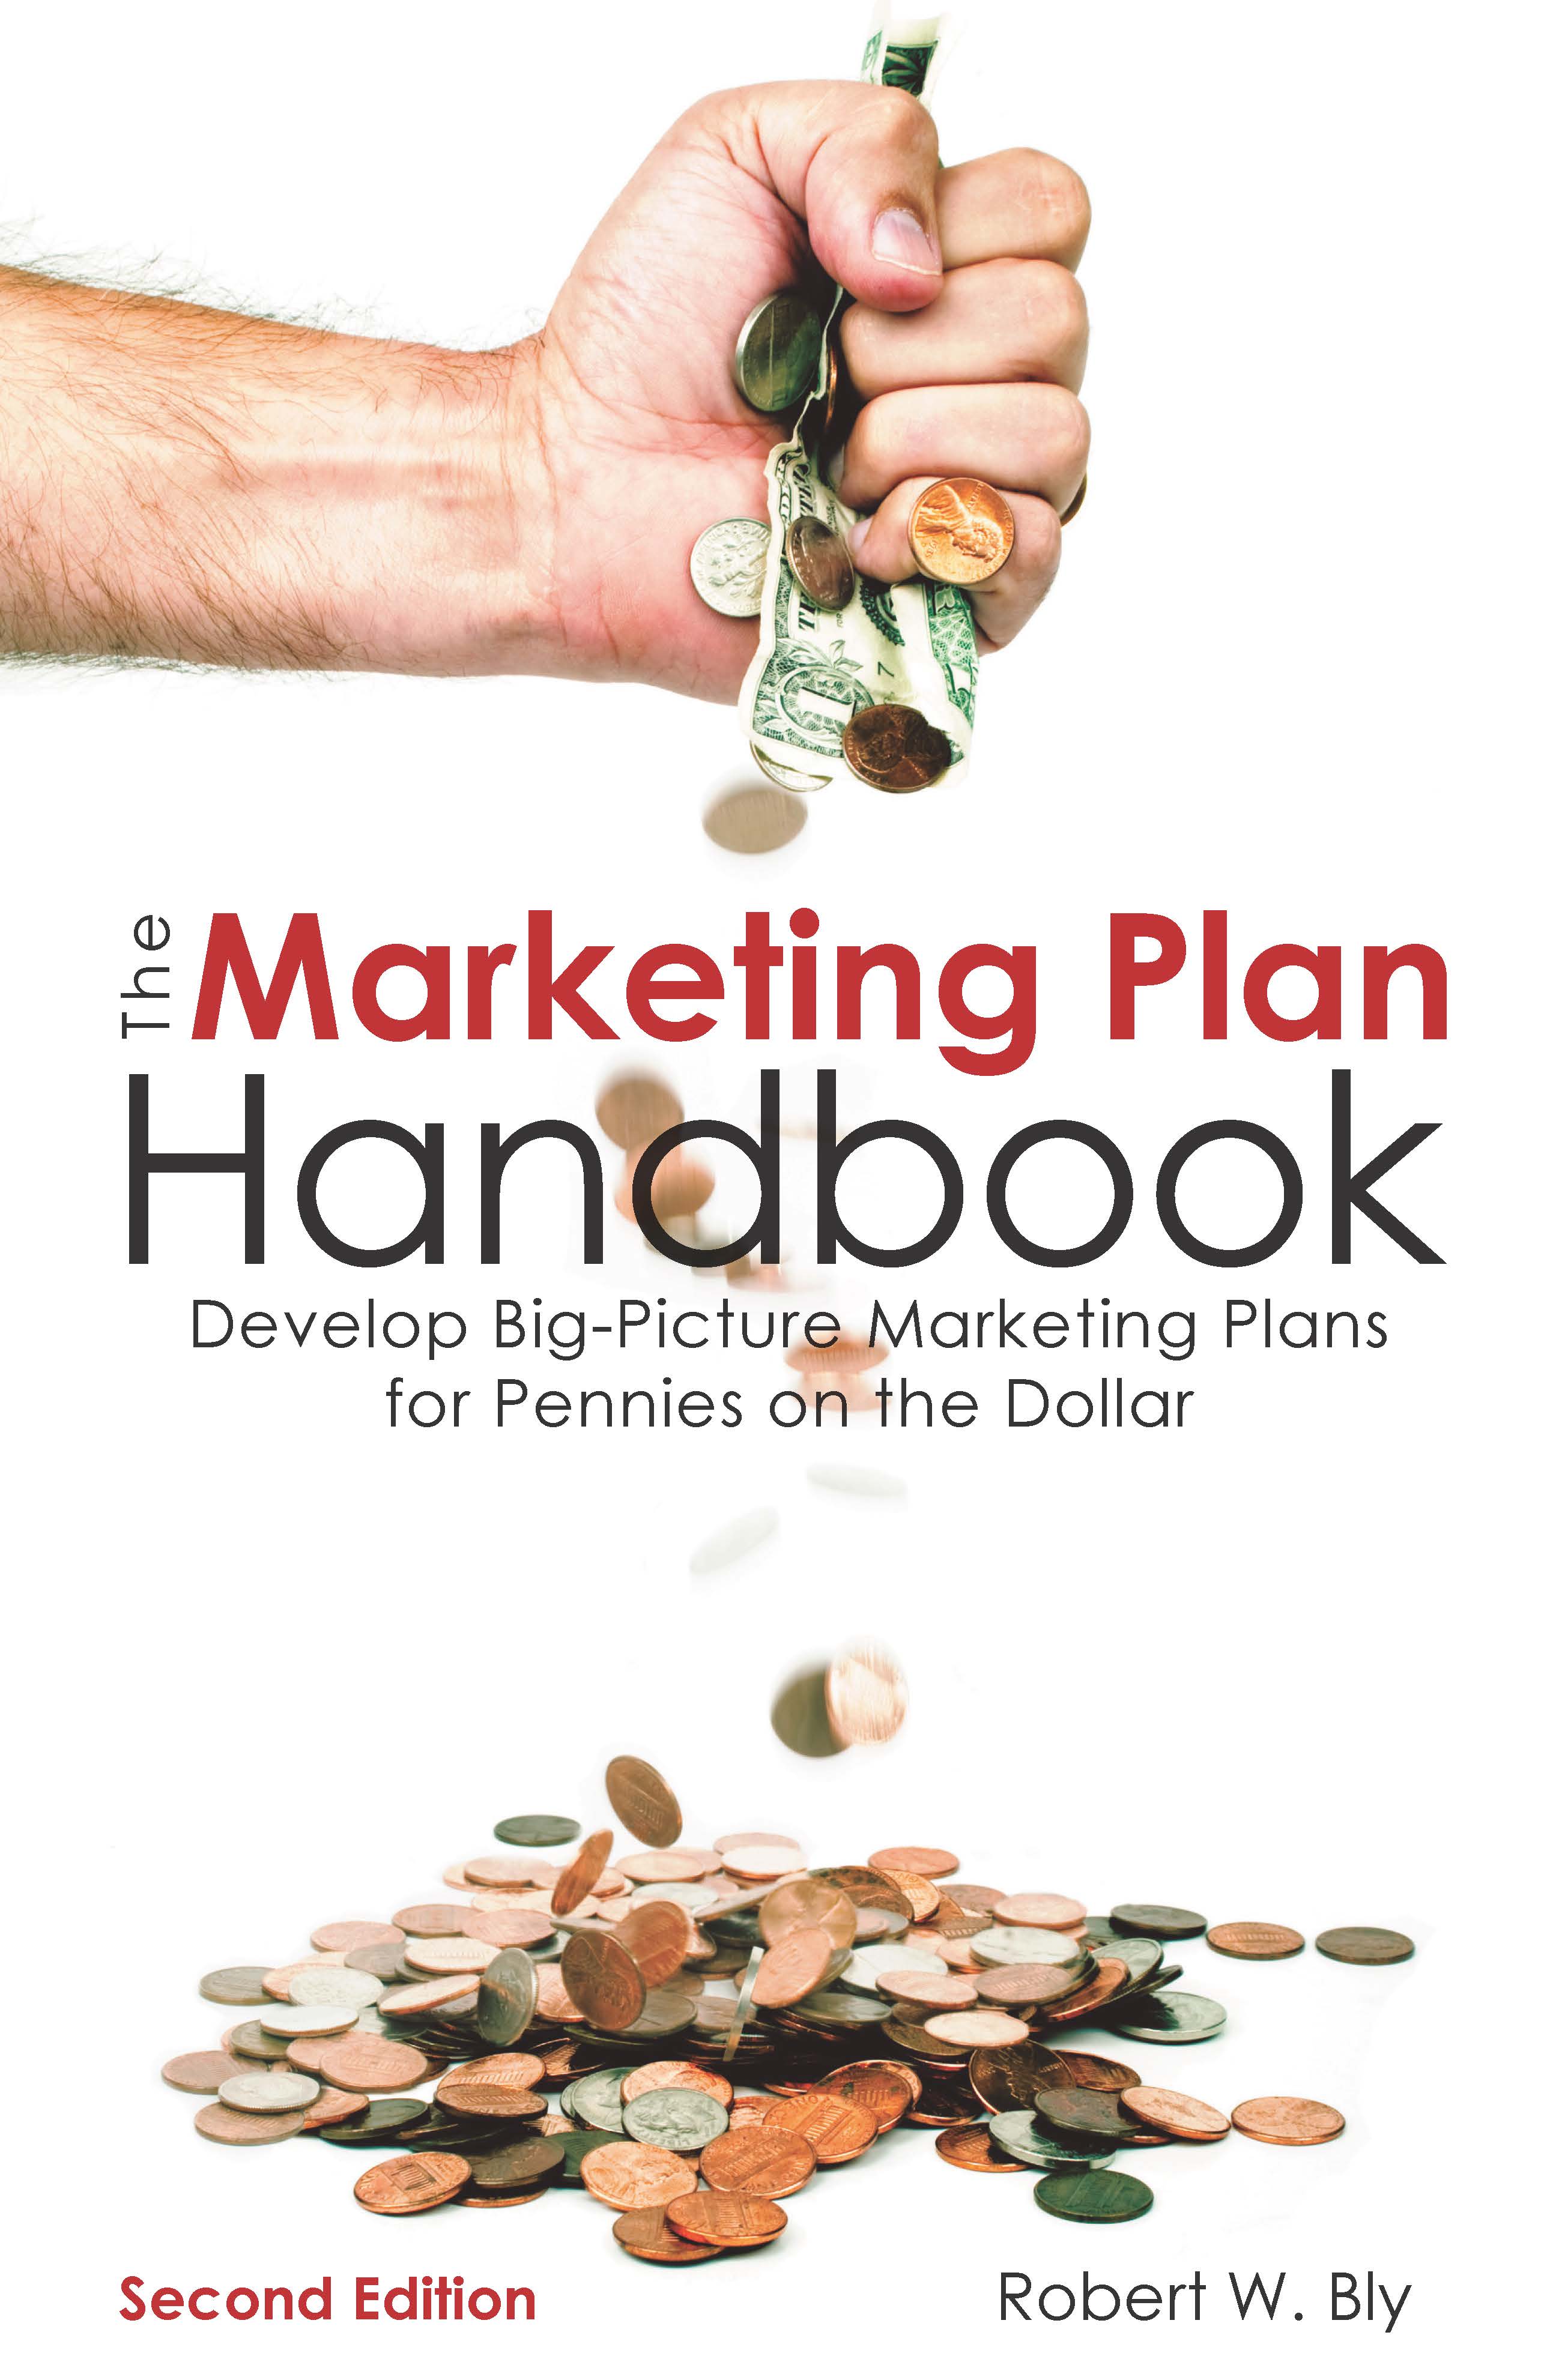 The Marketing Plan Handbook